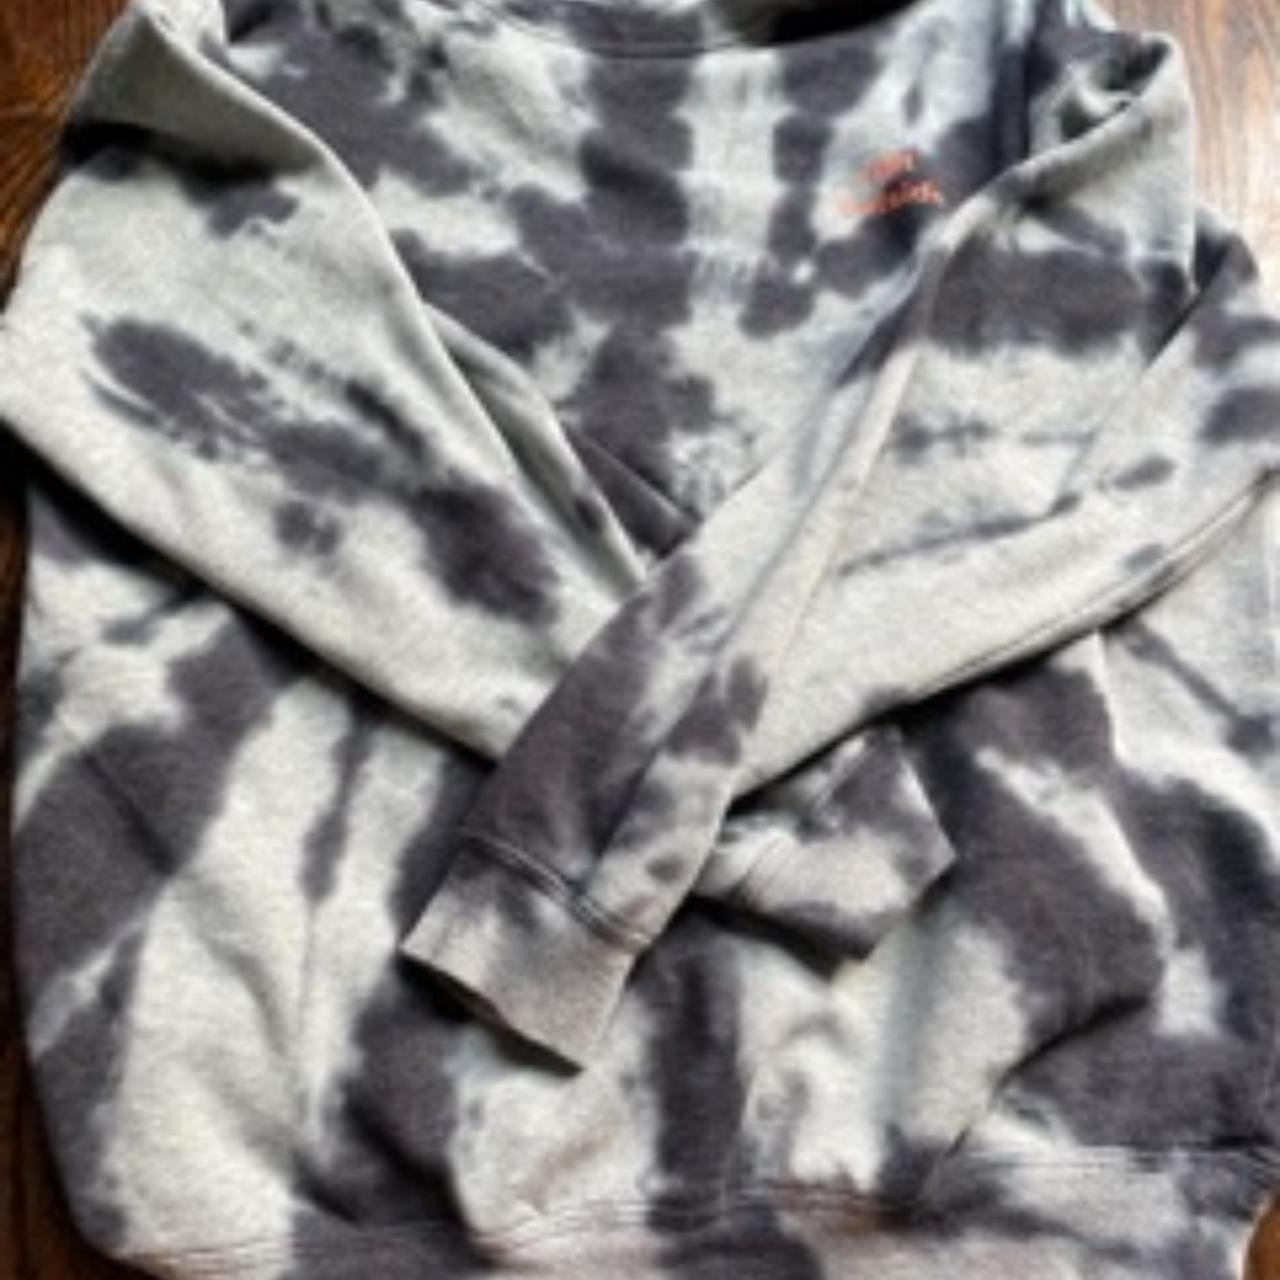 Miami Heat Court Culture Tie Dye Sweatshirt Brand: - Depop